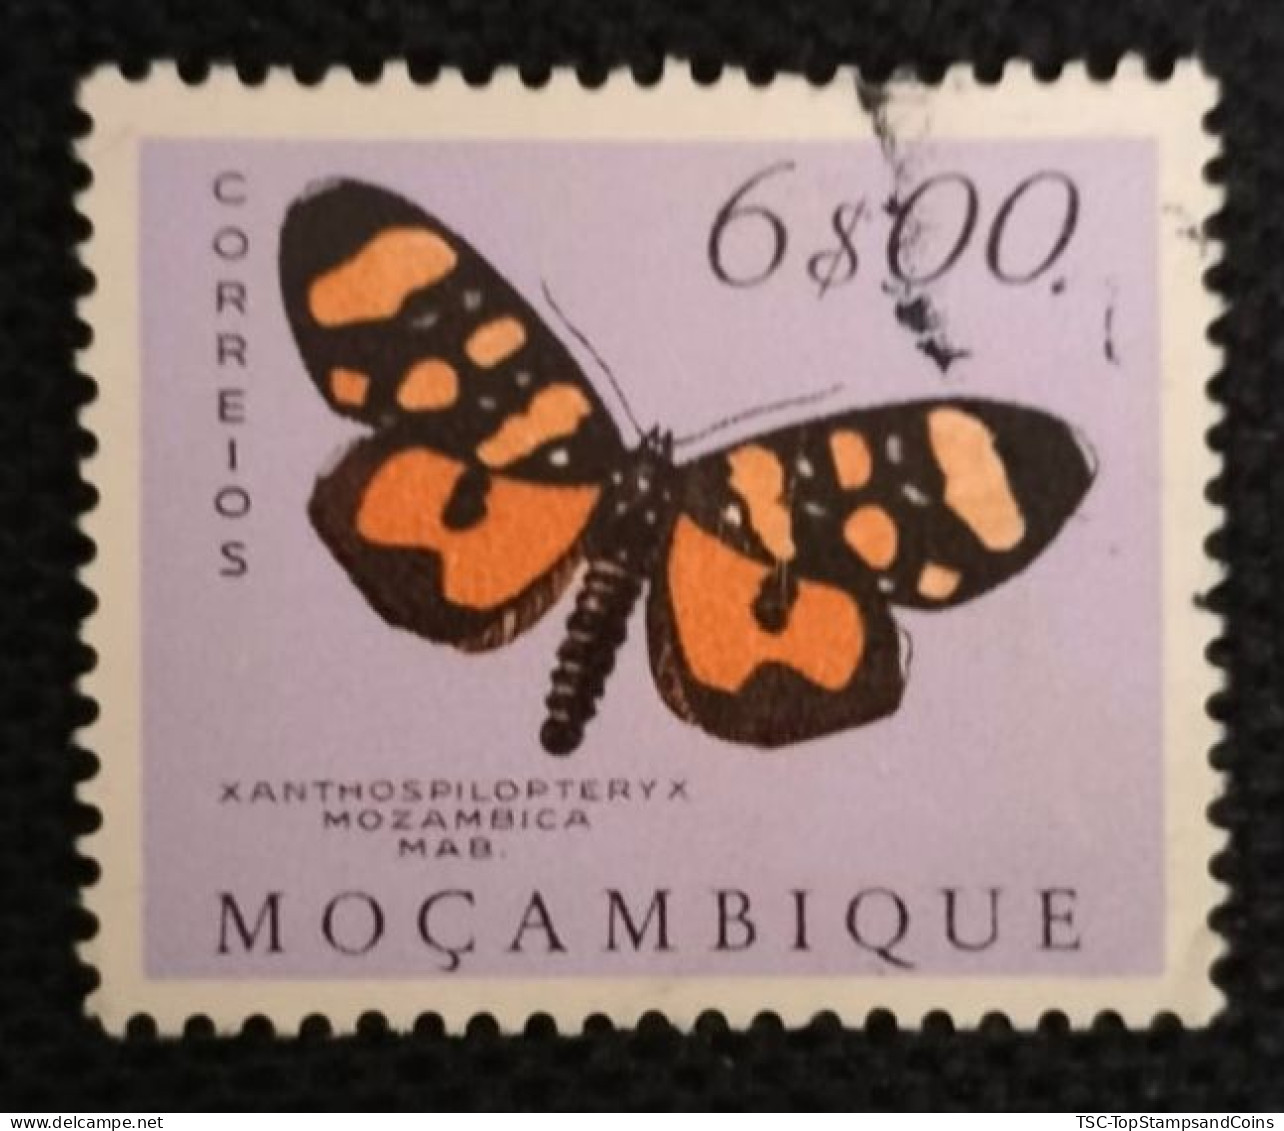 MOZPO0404U7 - Mozambique Butterflies - 6$00 Used Stamp - Mozambique - 1953 - Mosambik